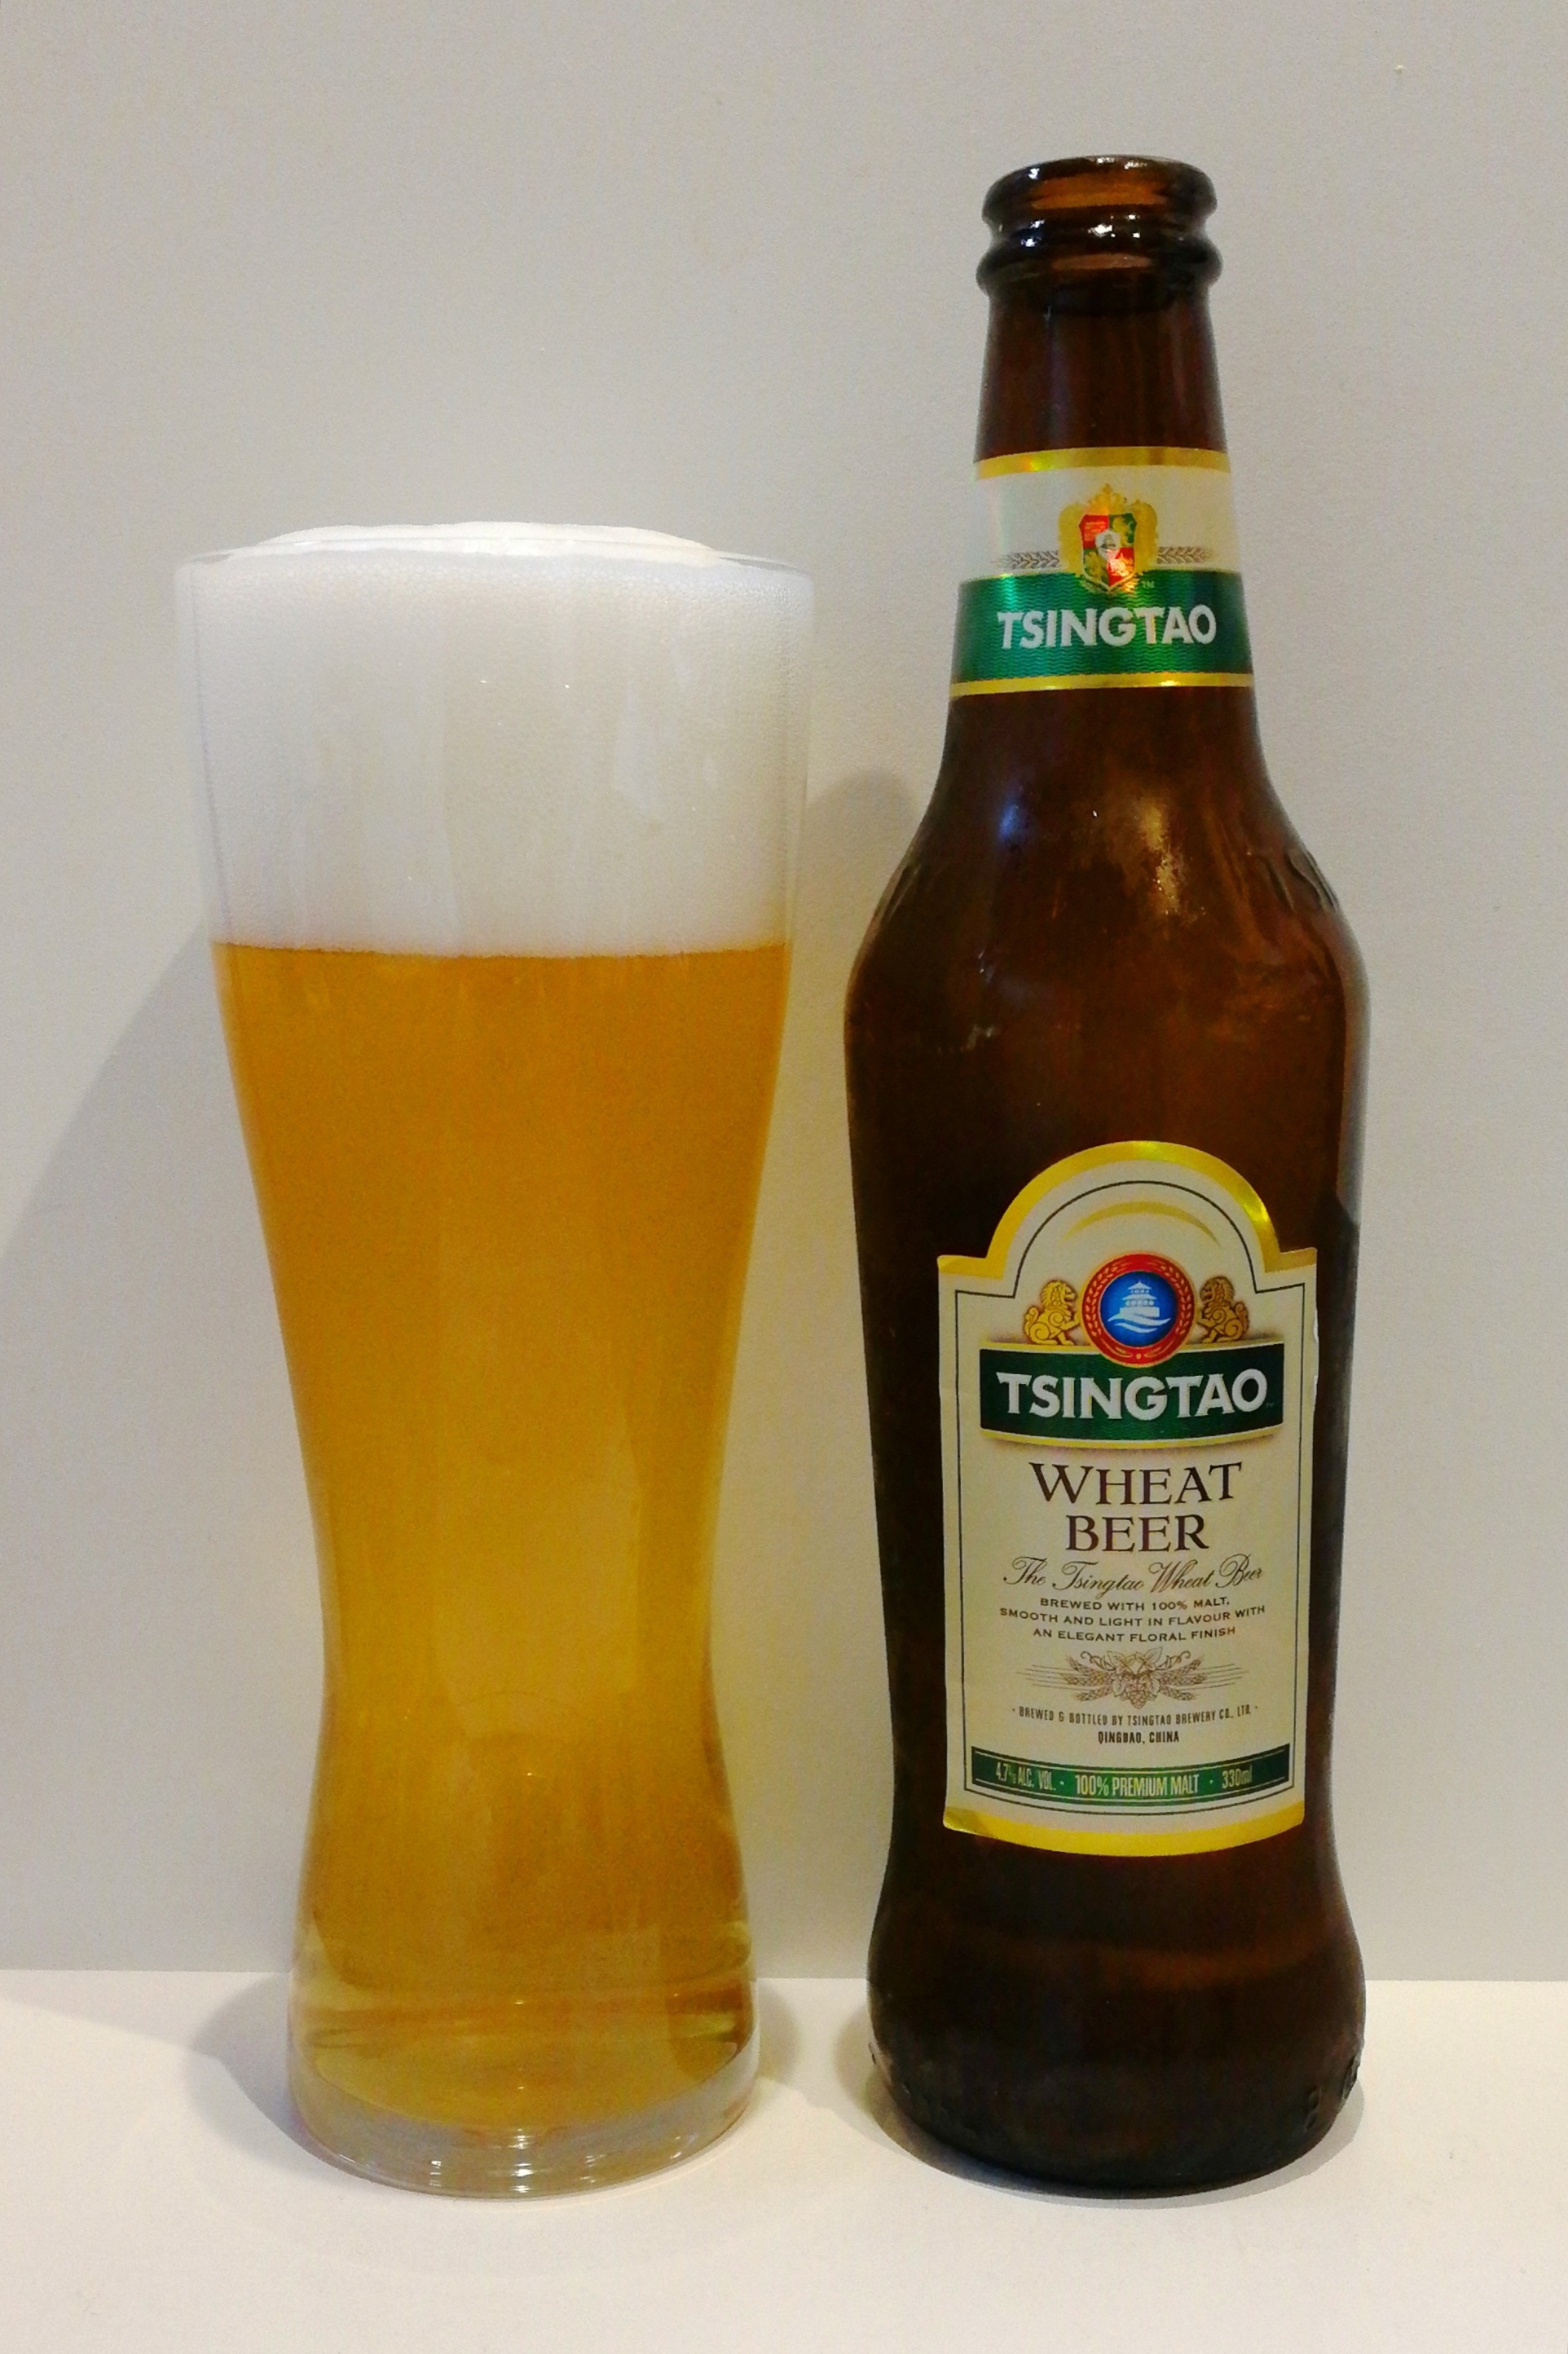 Tsingtao Brewery Company Limited,青岛啤酒股份有限公司,WHEATBEER